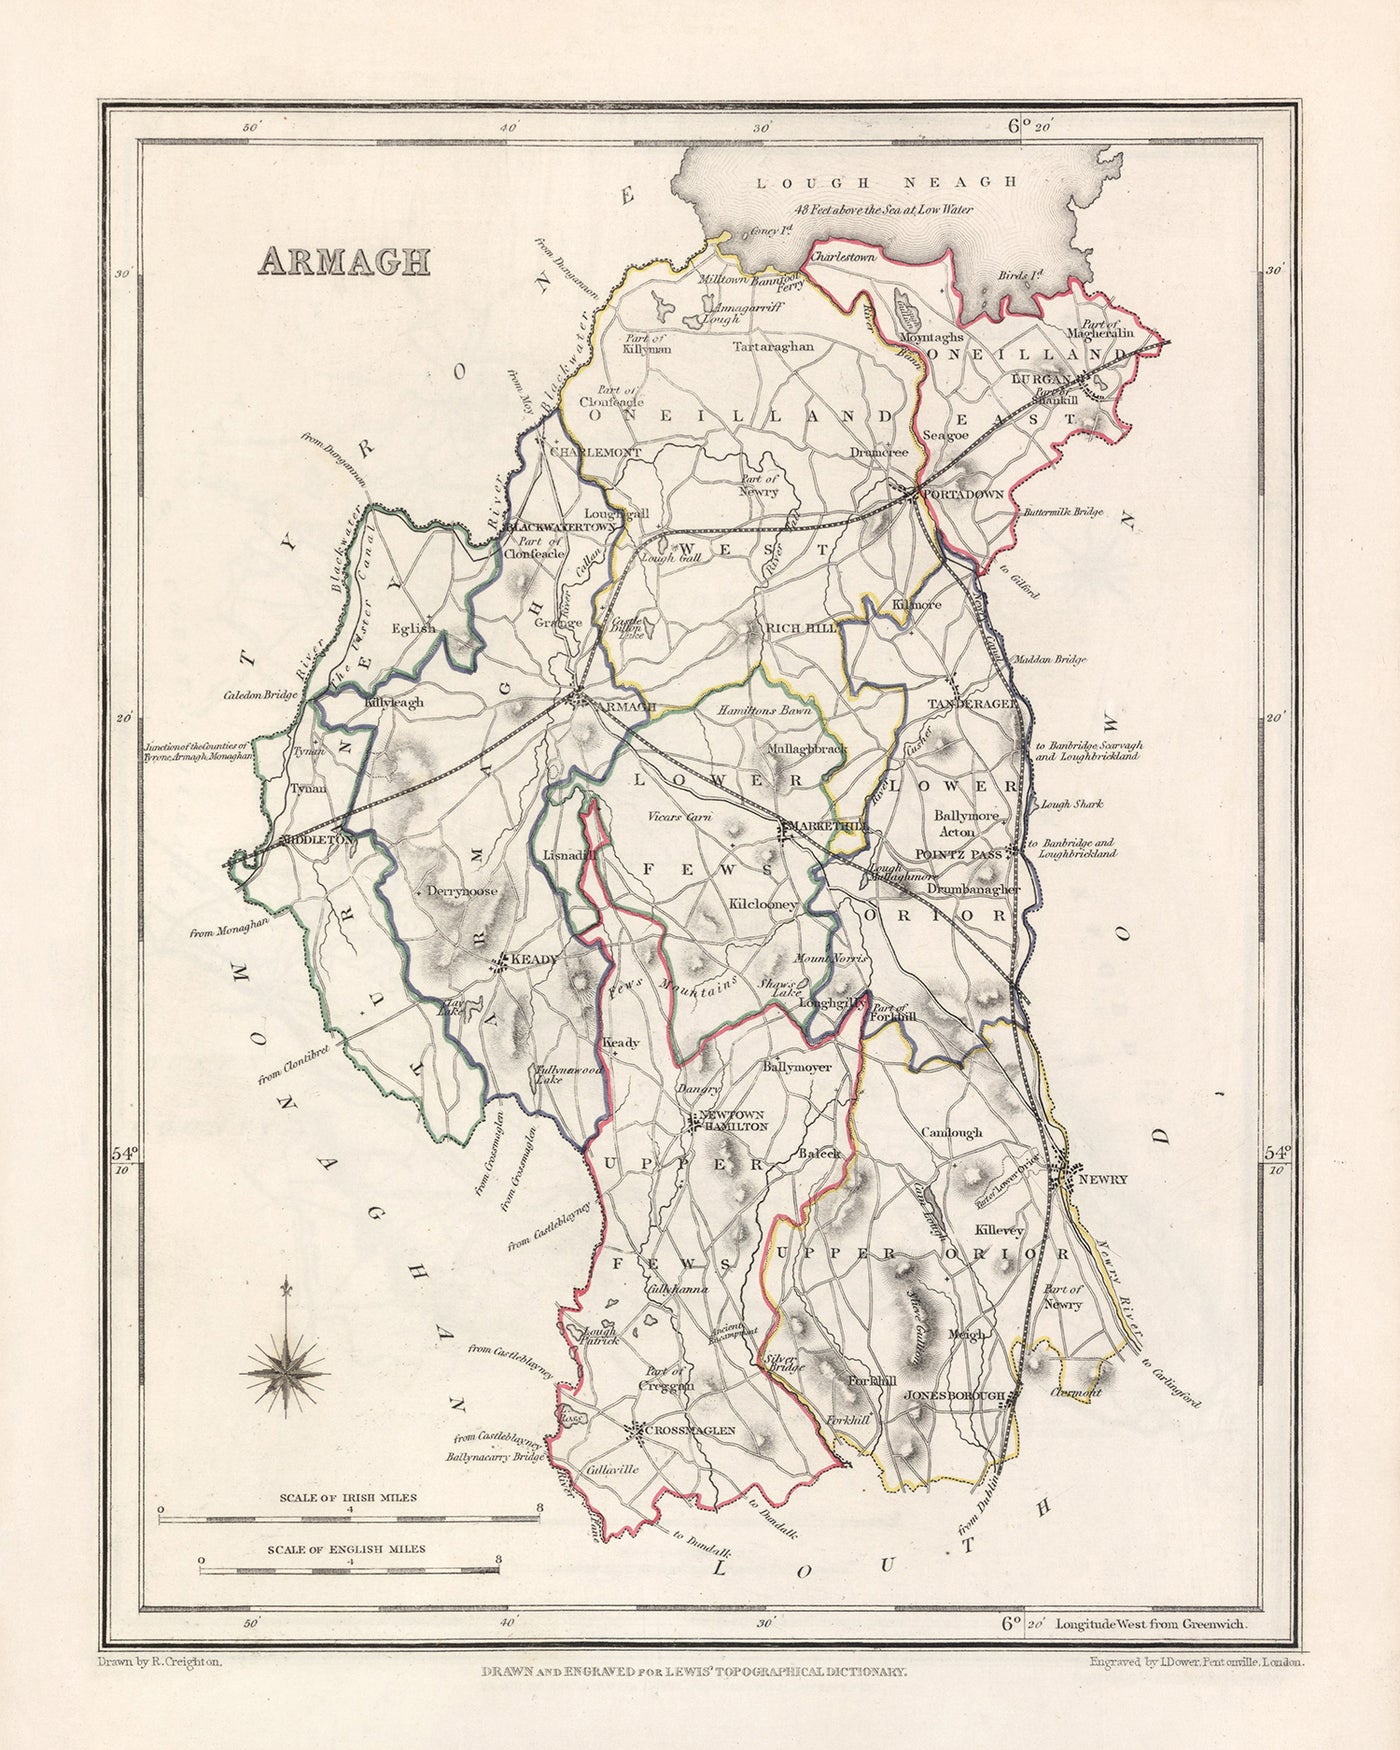 Ancienne carte du comté d'Armagh par Samuel Lewis, 1844 : Lurgan, Portadown, Markethill, Keady, Tandragee